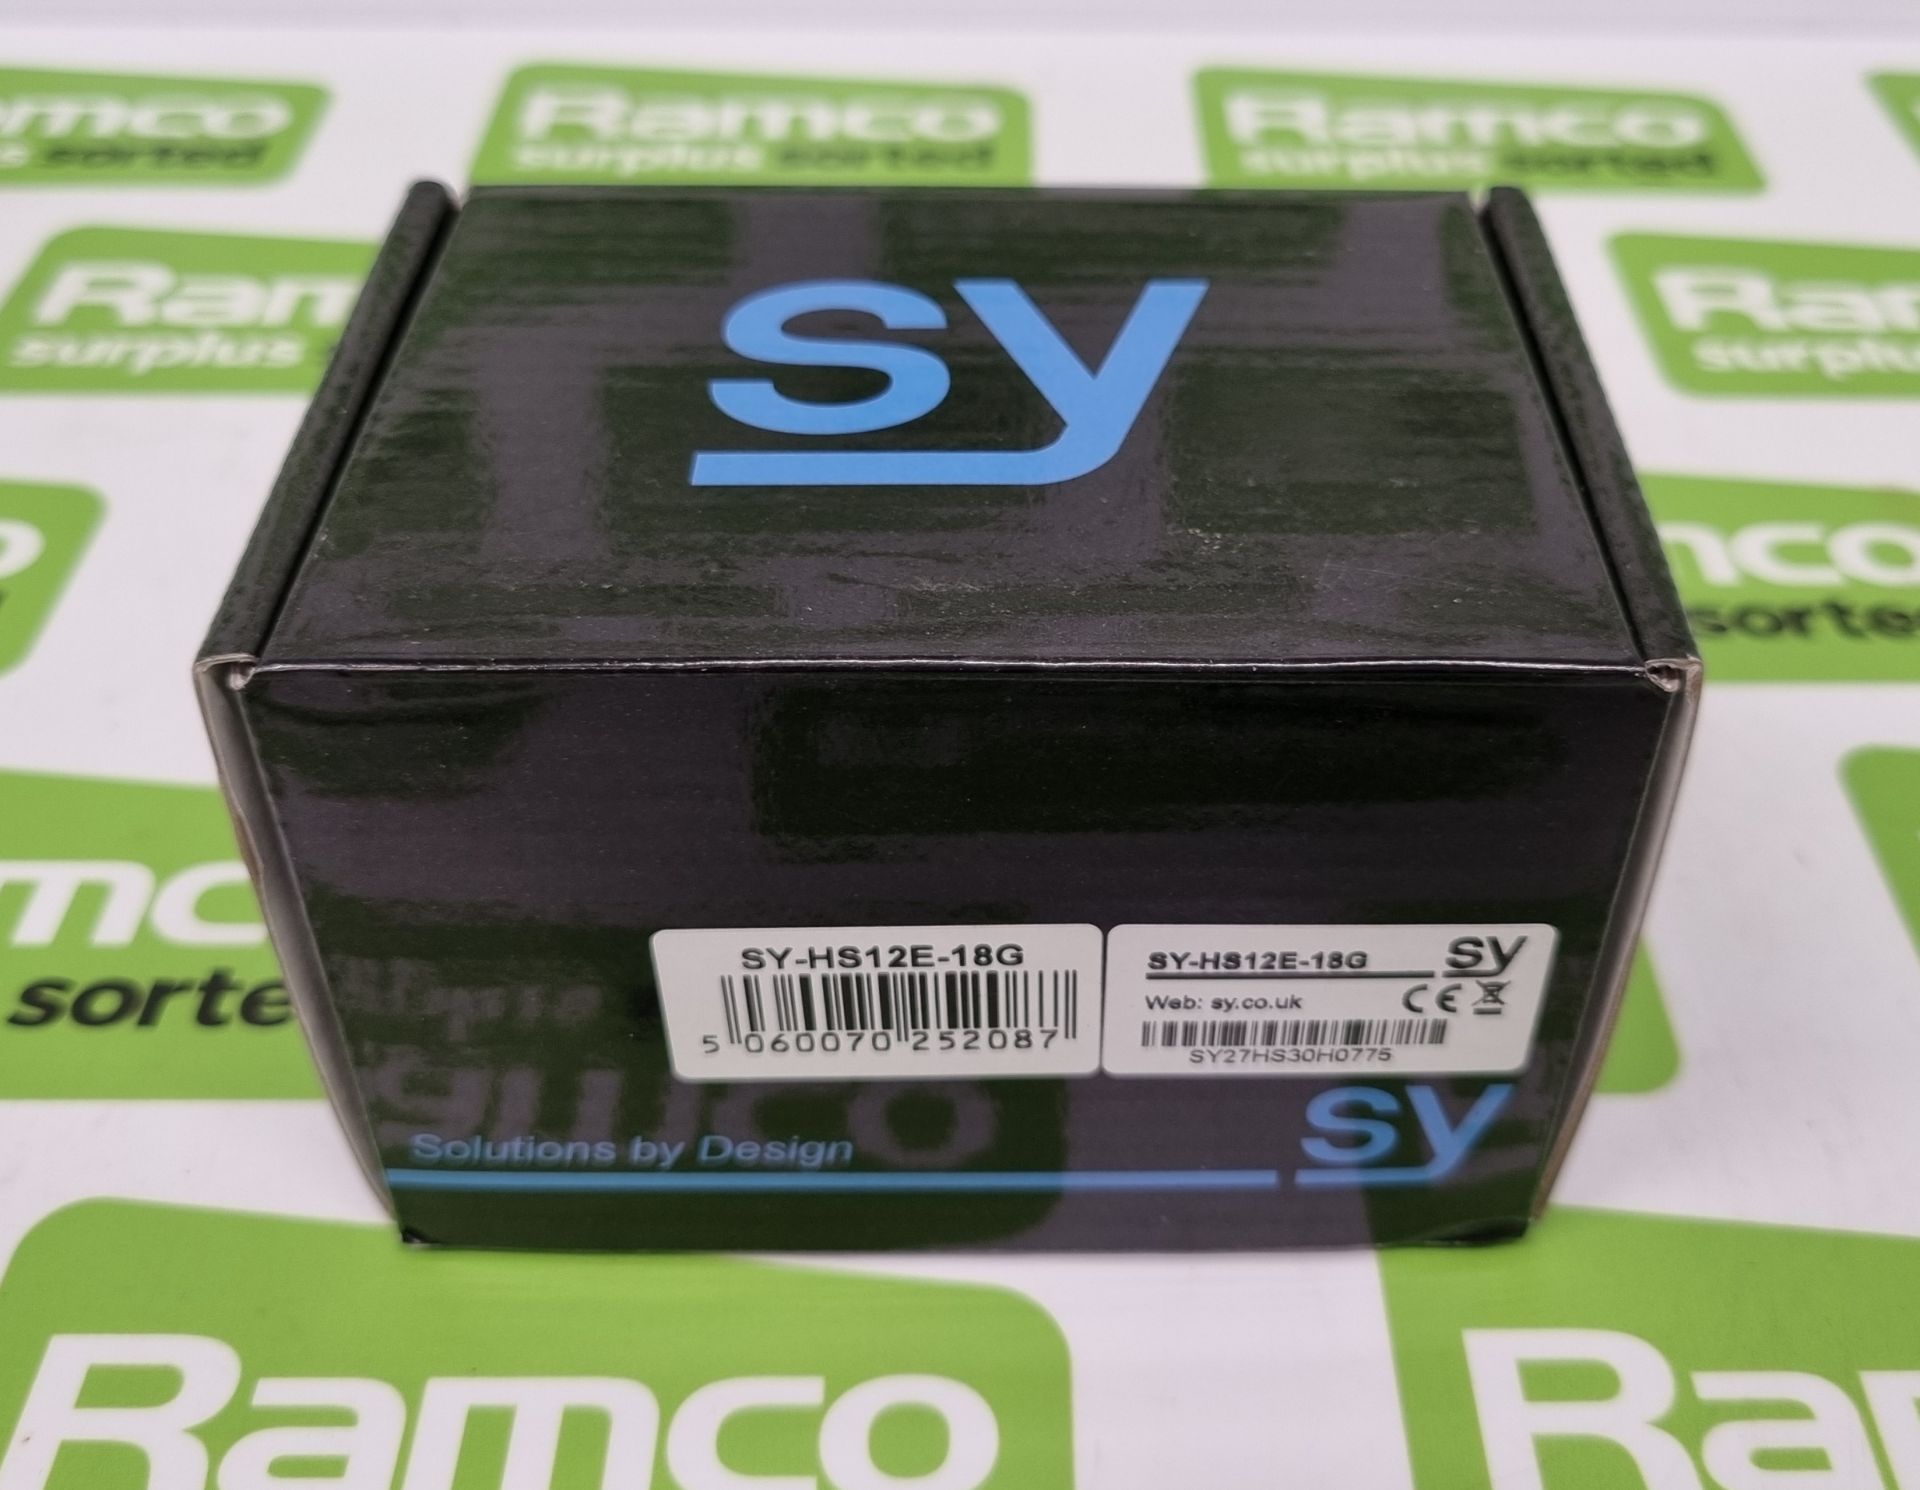 SY-HS12E-18G 1x2 HDMI 2.0 (18Gbps) splitter